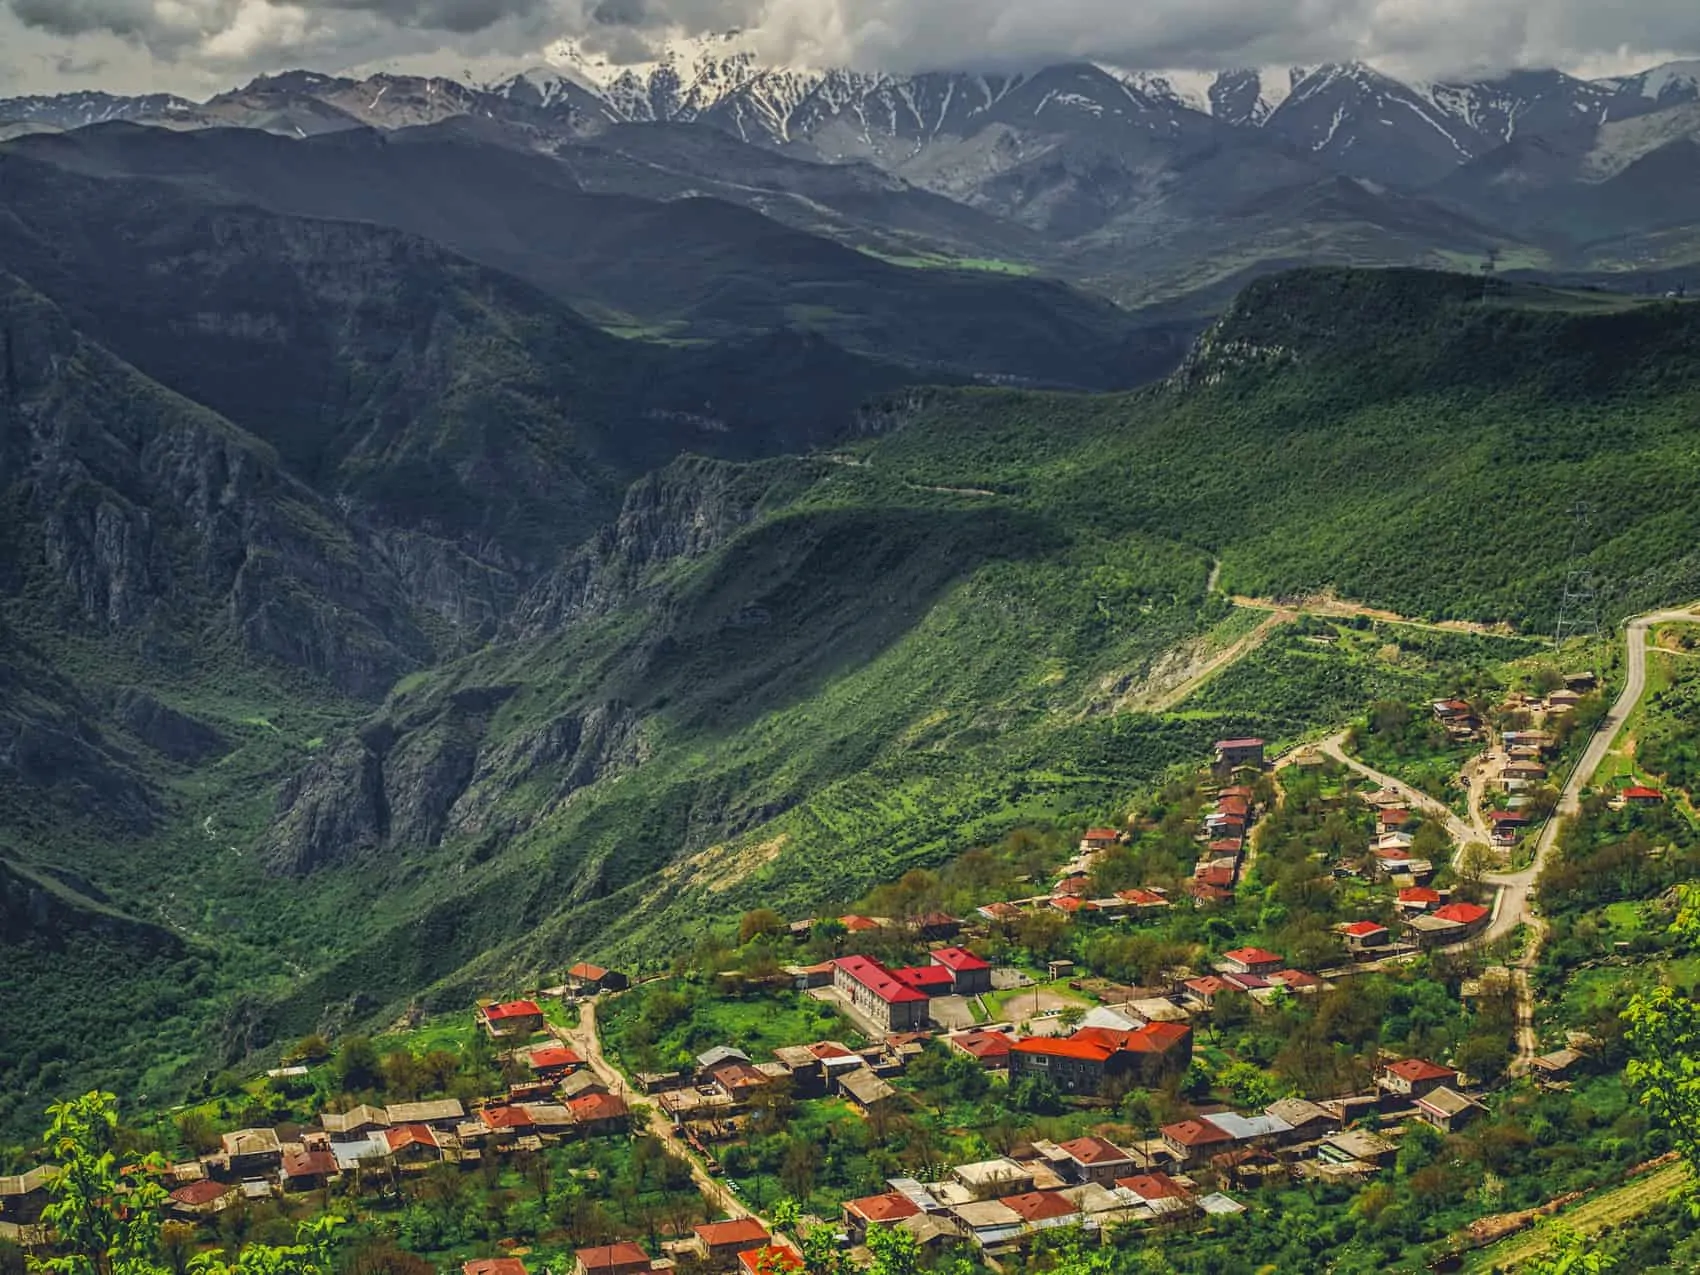 Armenien dramatsik bjerglandskab